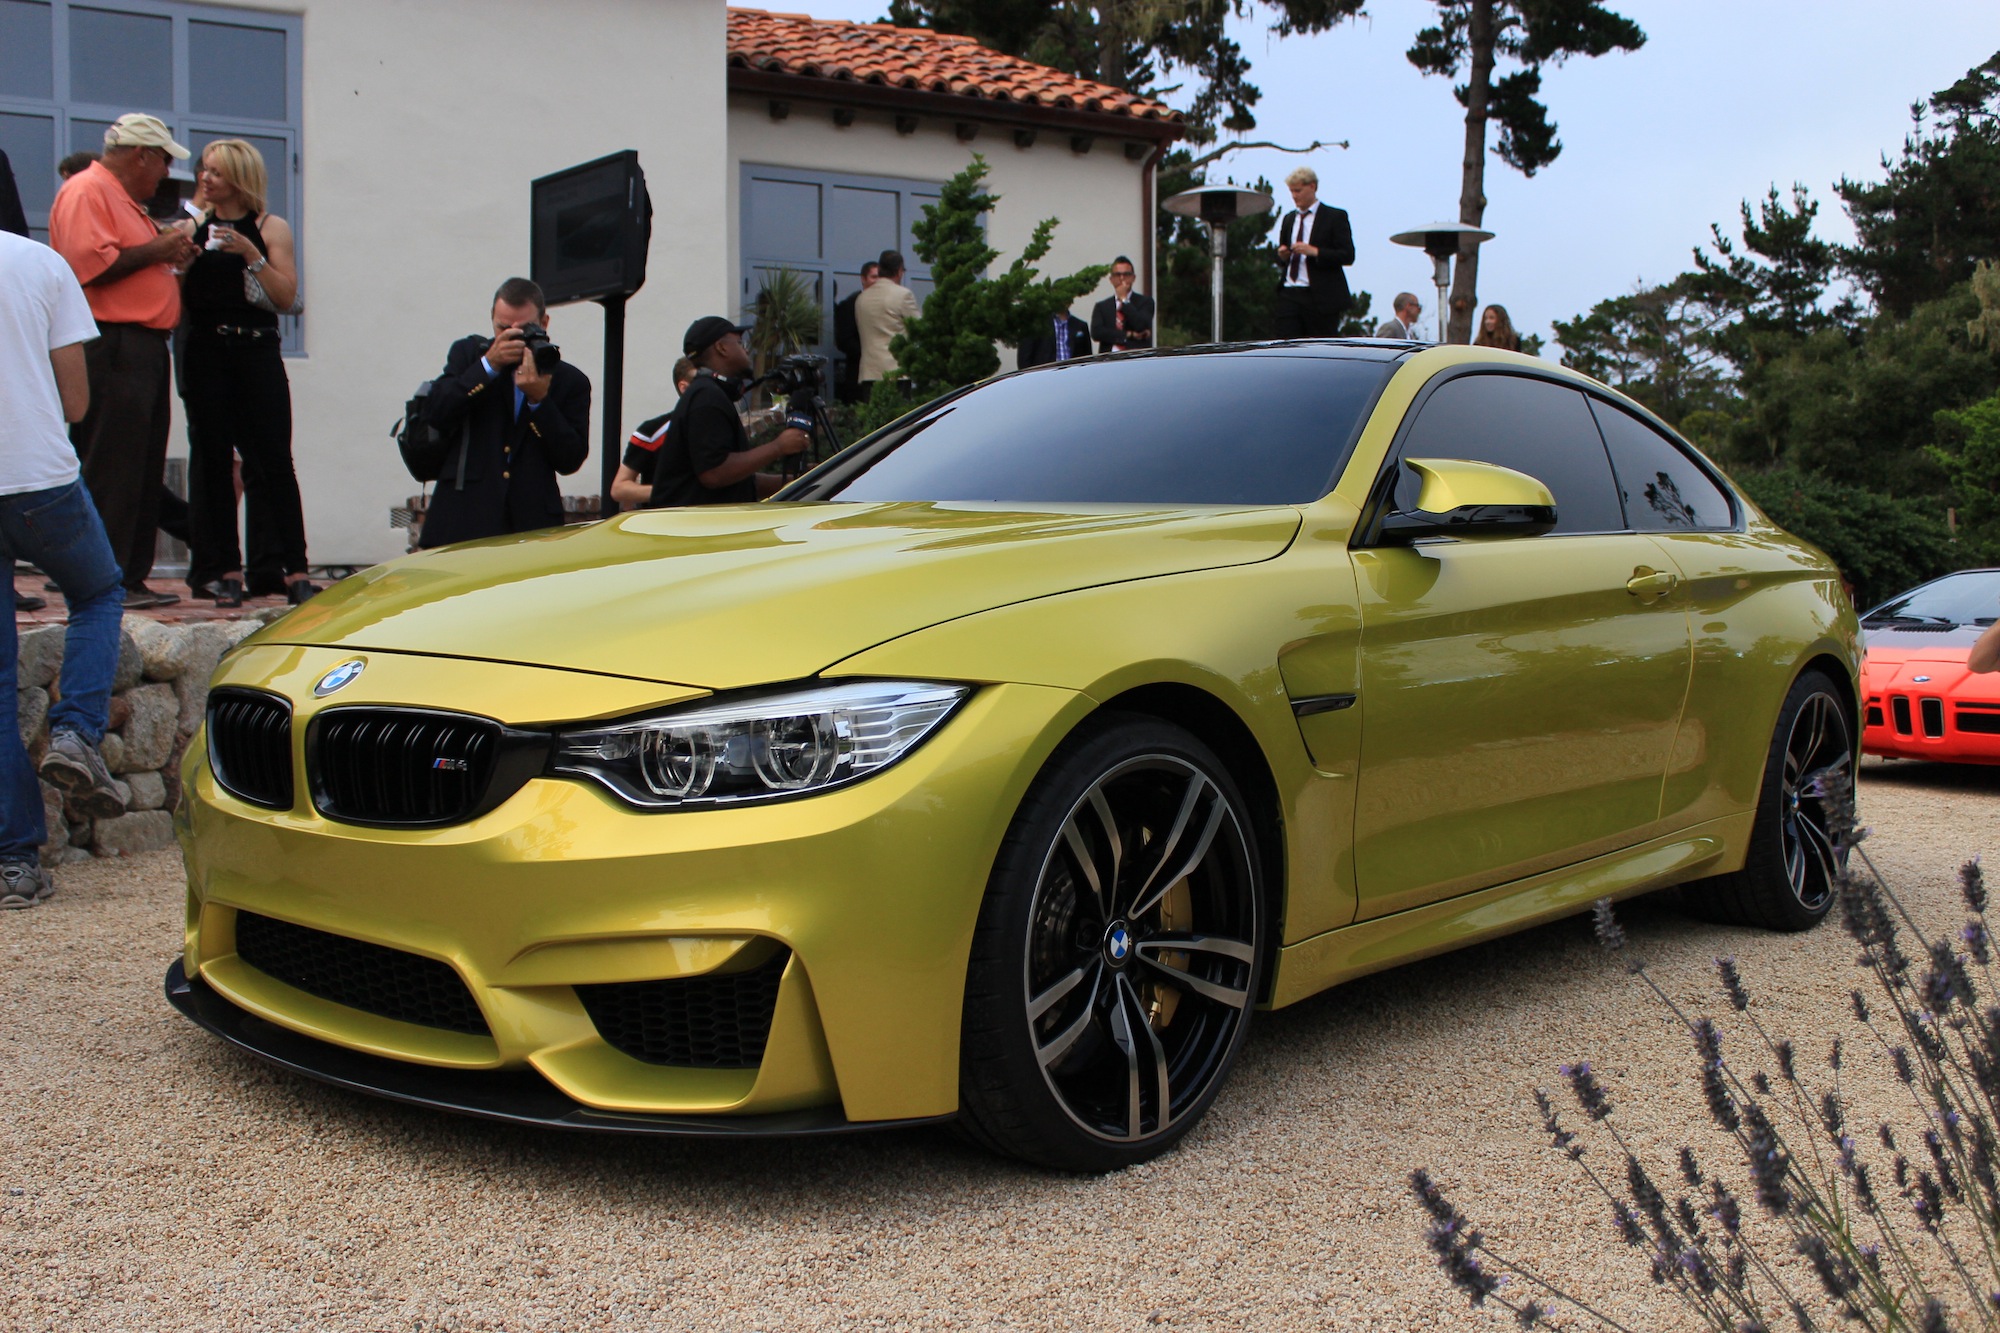 2013 BMW M4 Coupe Concept